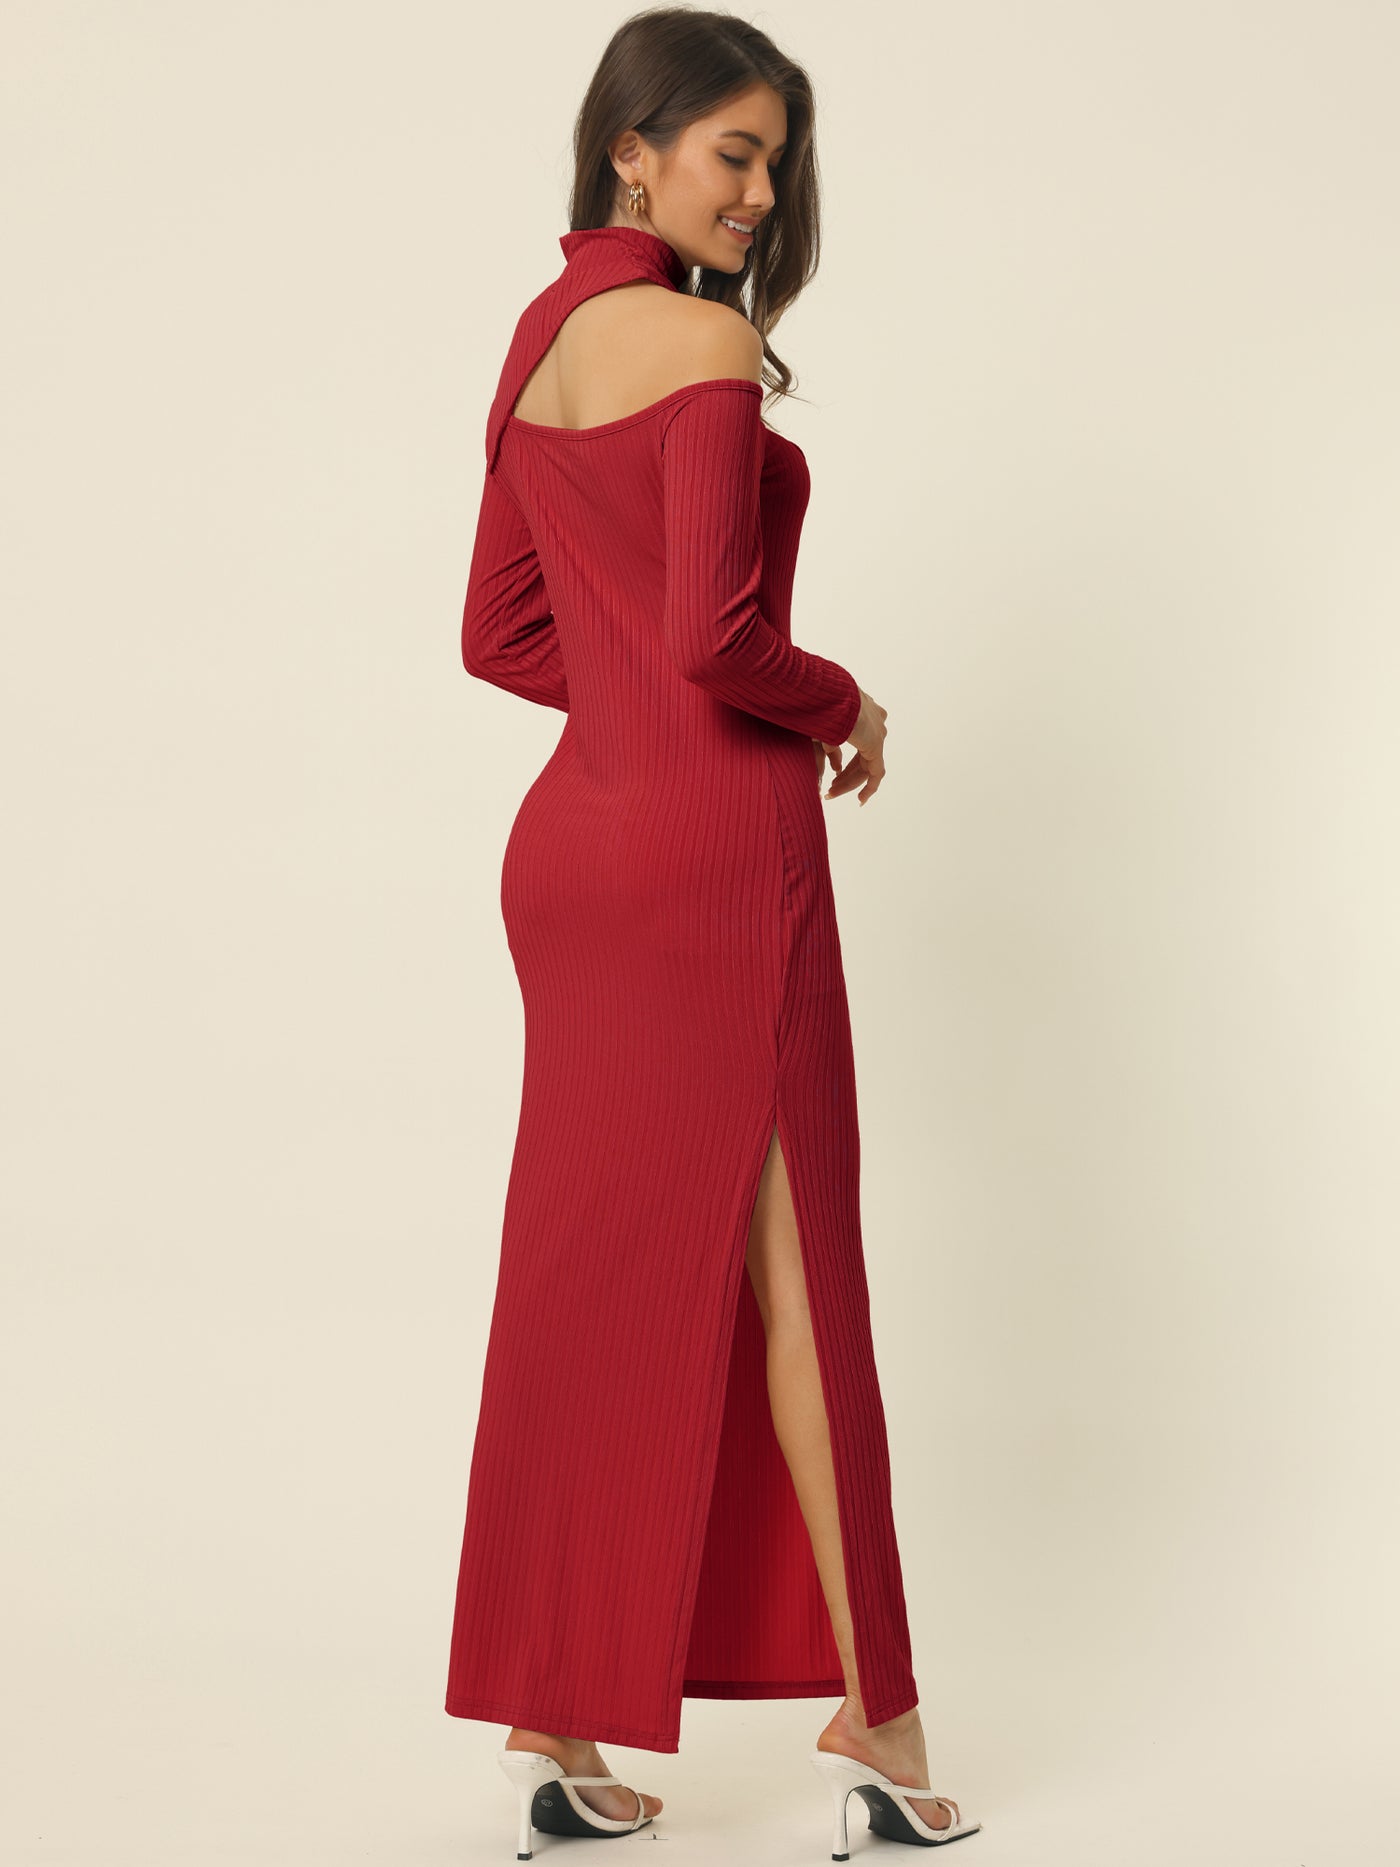 Bublédon Women's Fall Winter Cutout Shoulder High Neck Long Sleeve Slit Maxi Elegant Dress